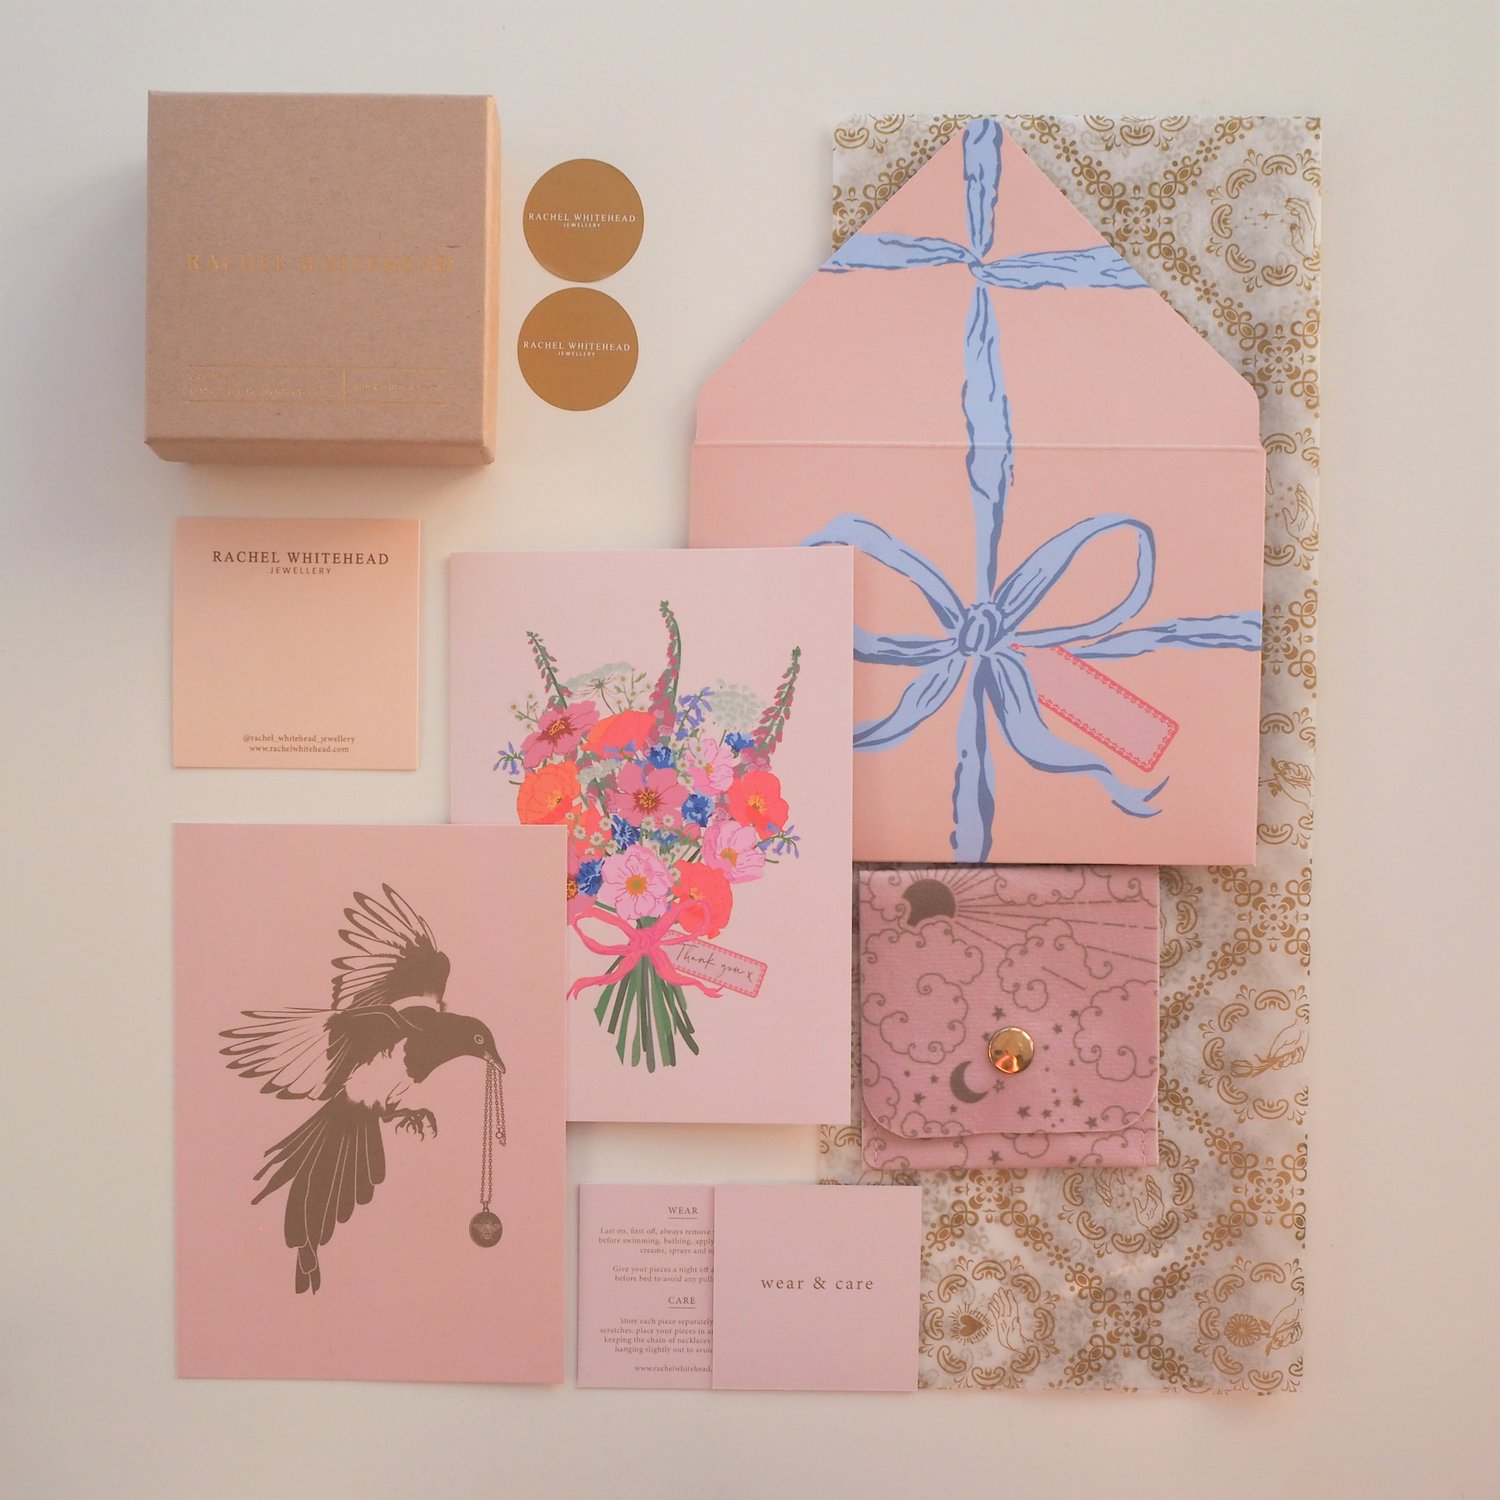 Rachel+Whitehead+Jewellery+Packaging+Spread